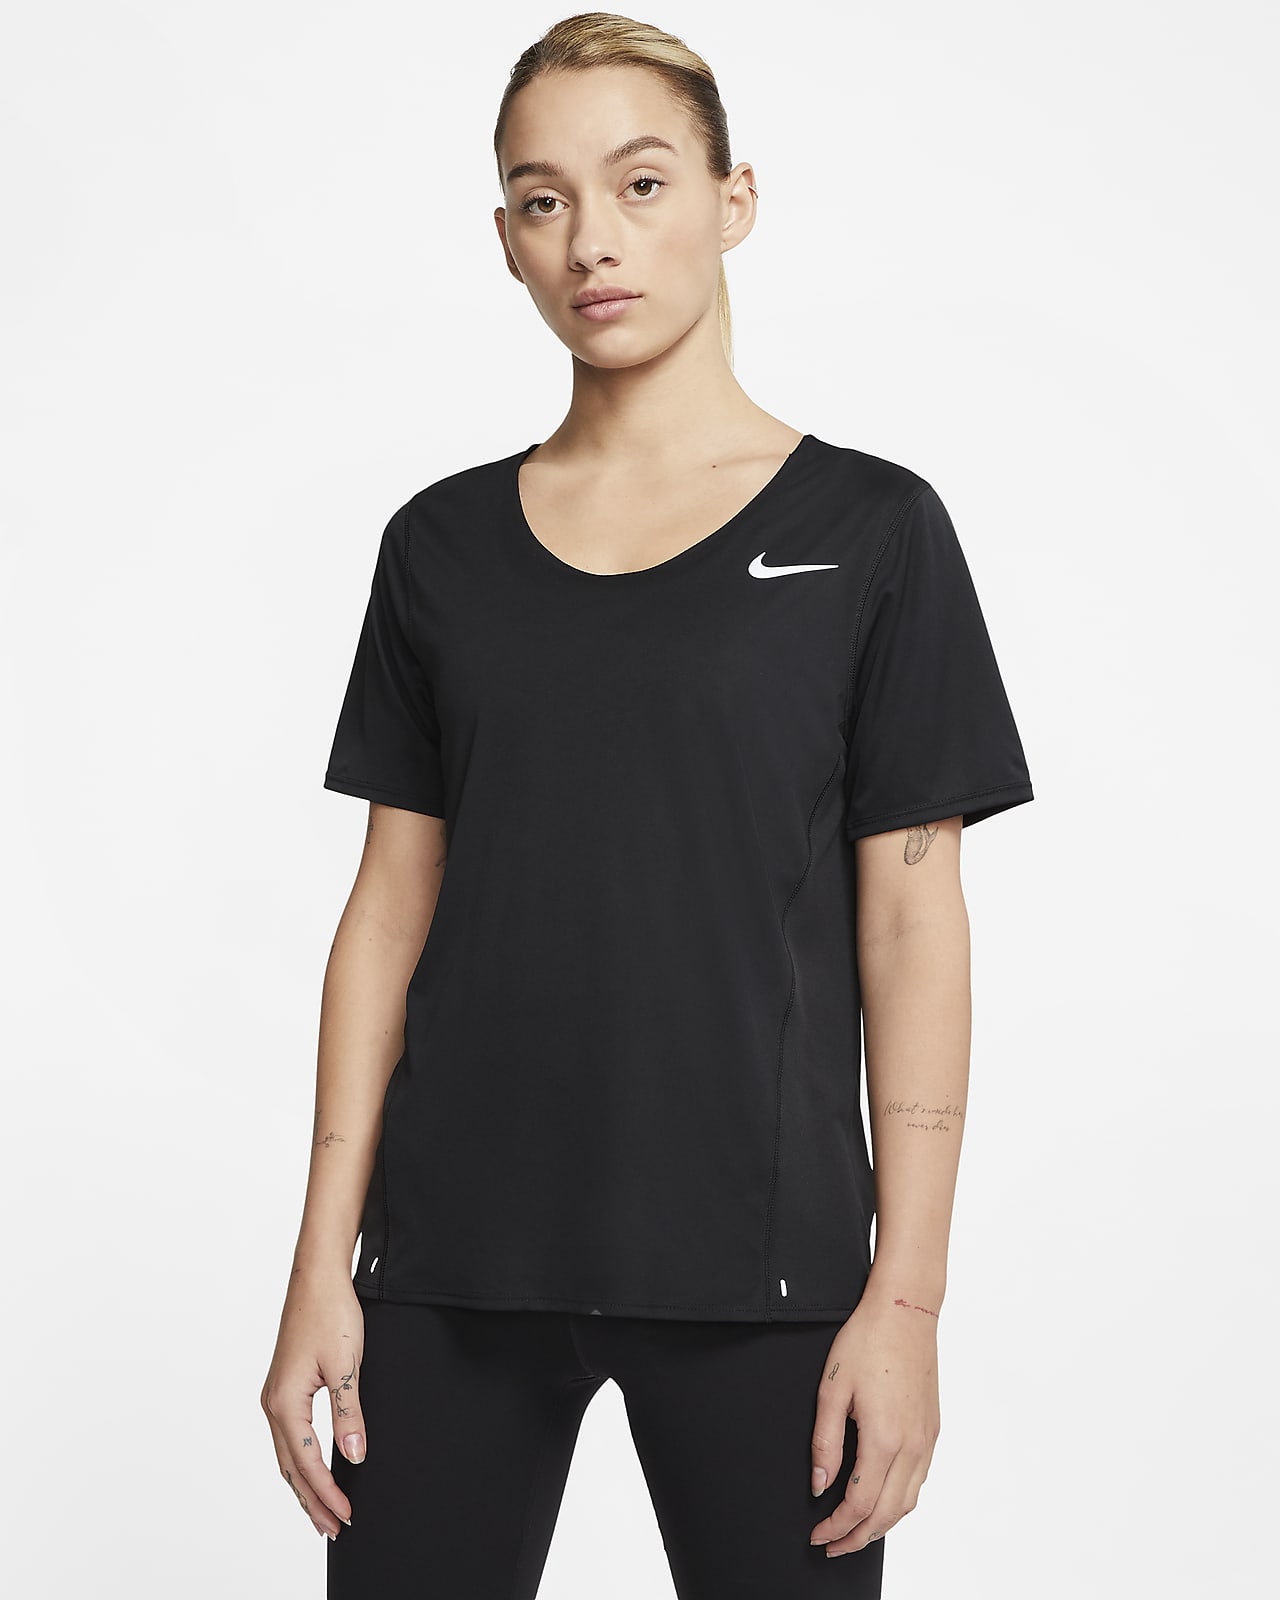 Nike City Sleek Women's Short-Sleeve Running Top